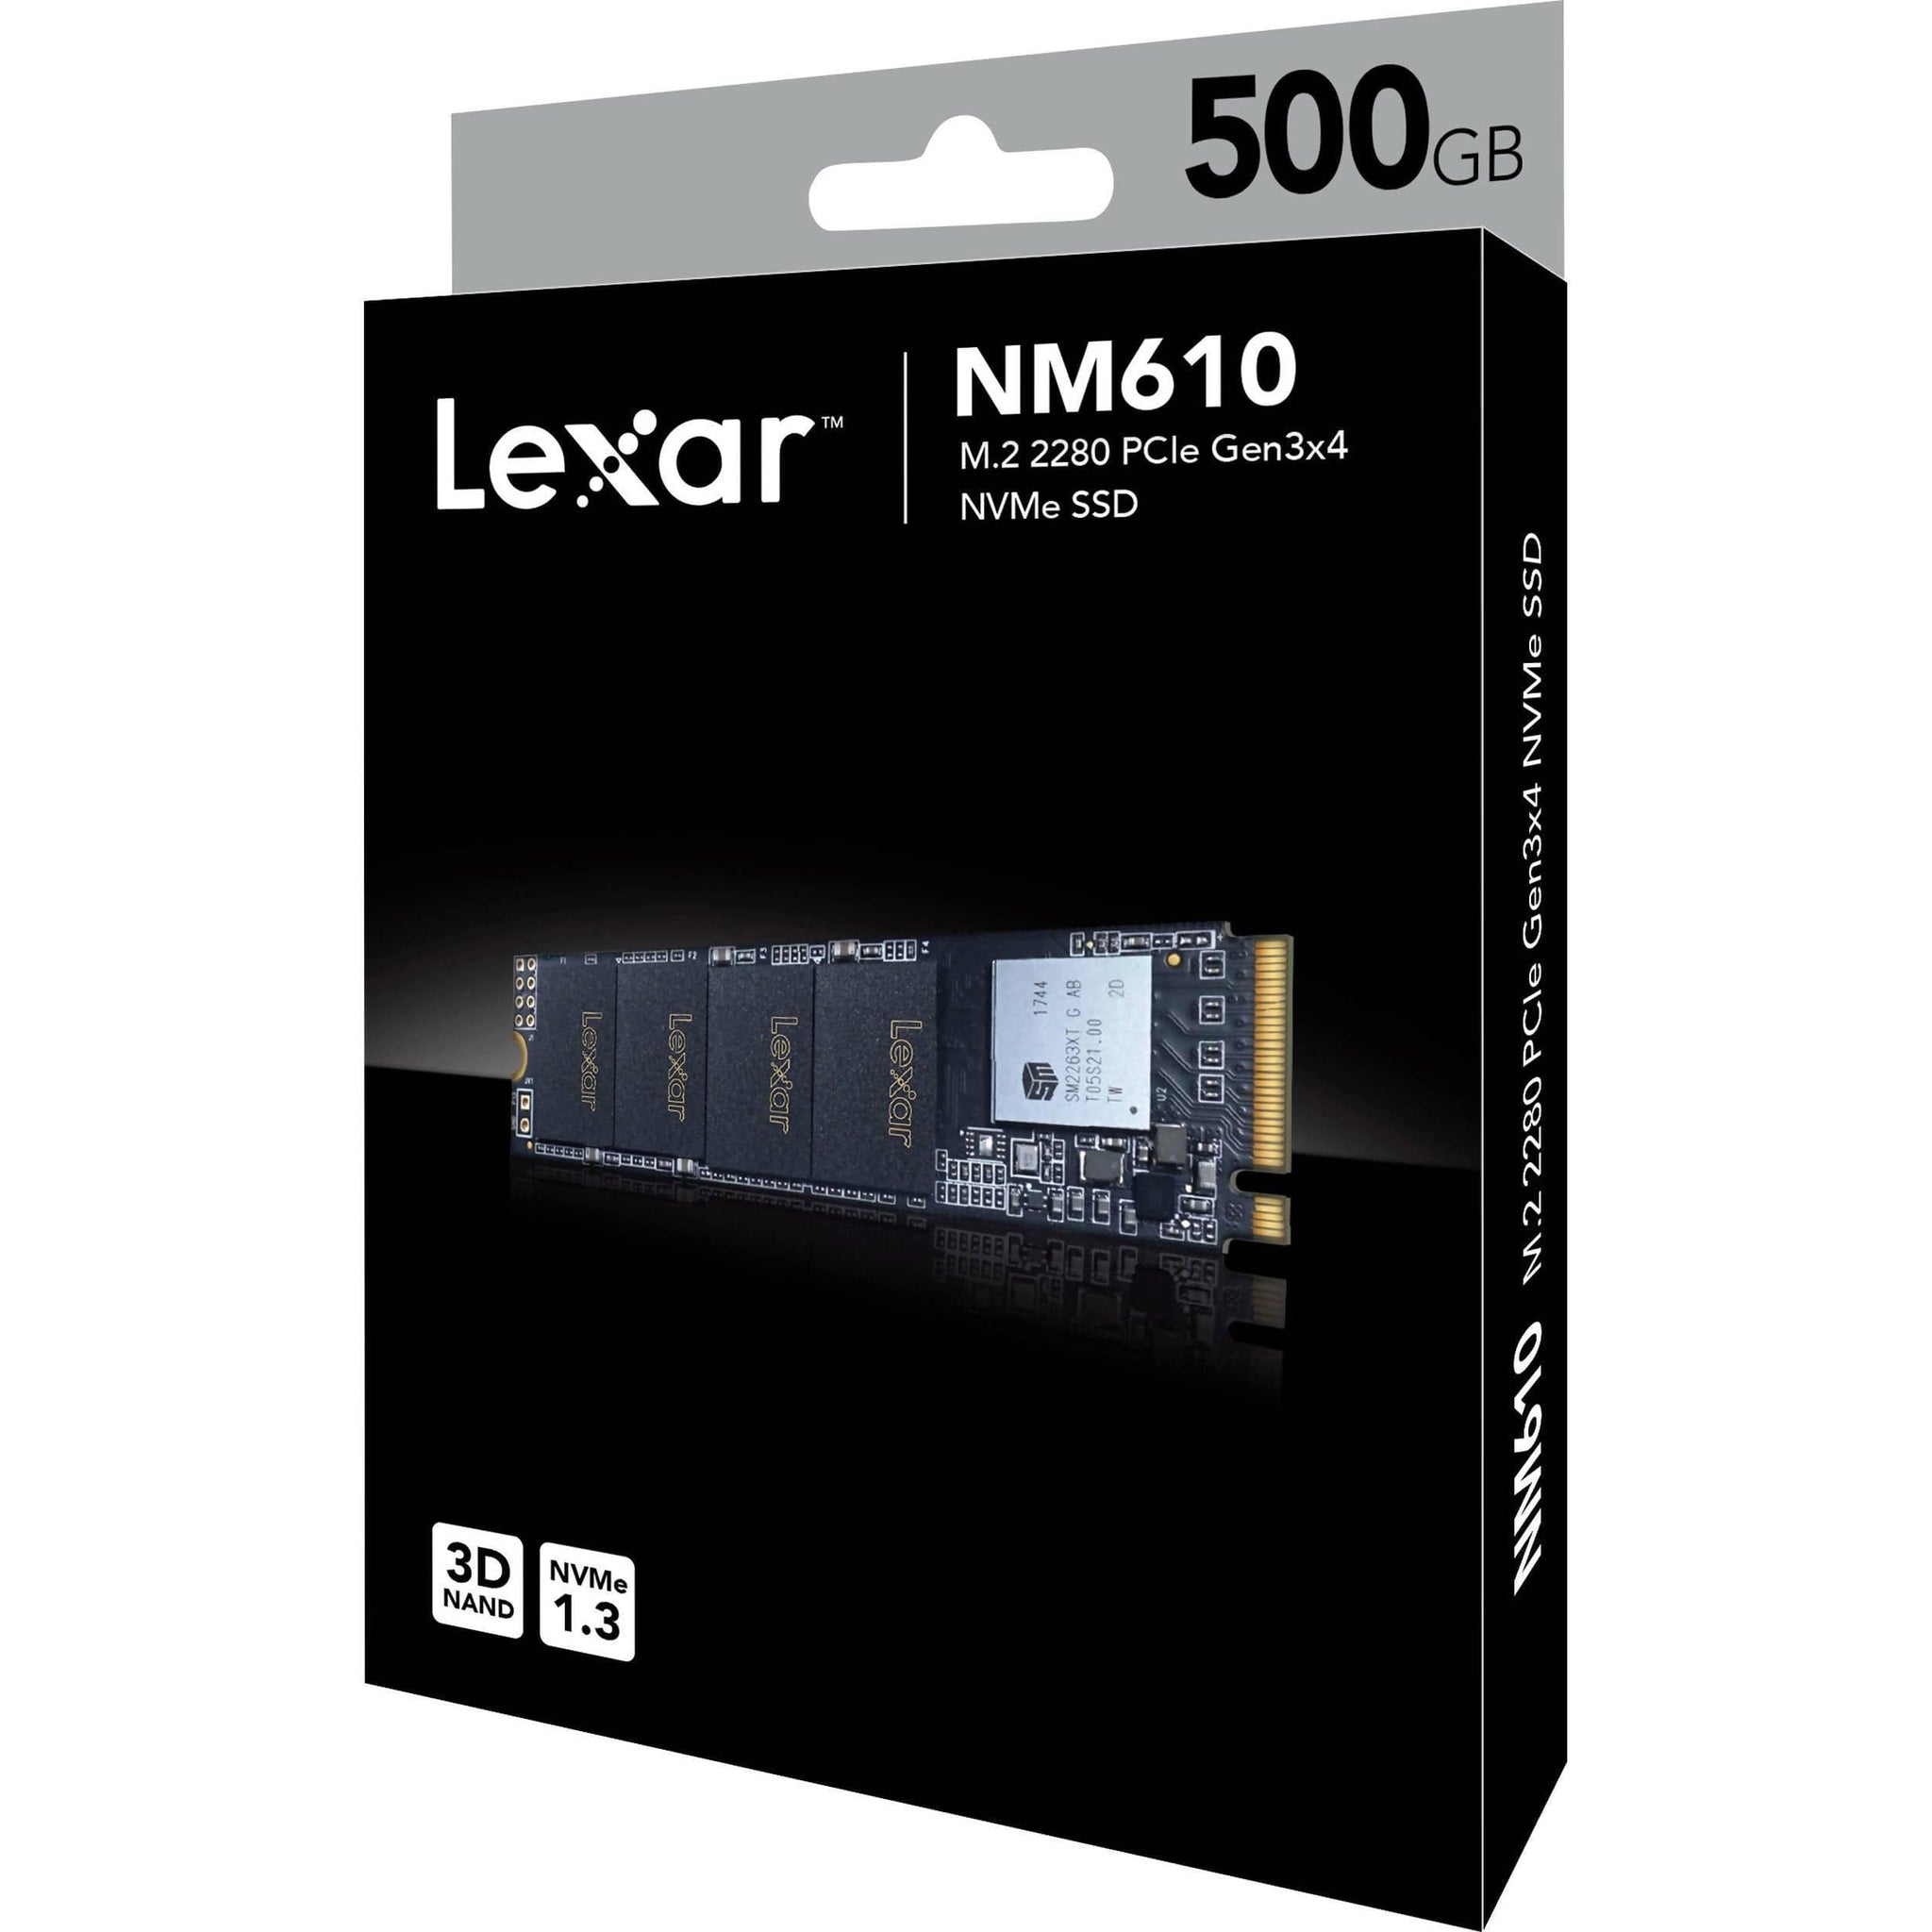 LEXAR 500GB NM610 M.2 NVME SSD Hard Drive - Winstore